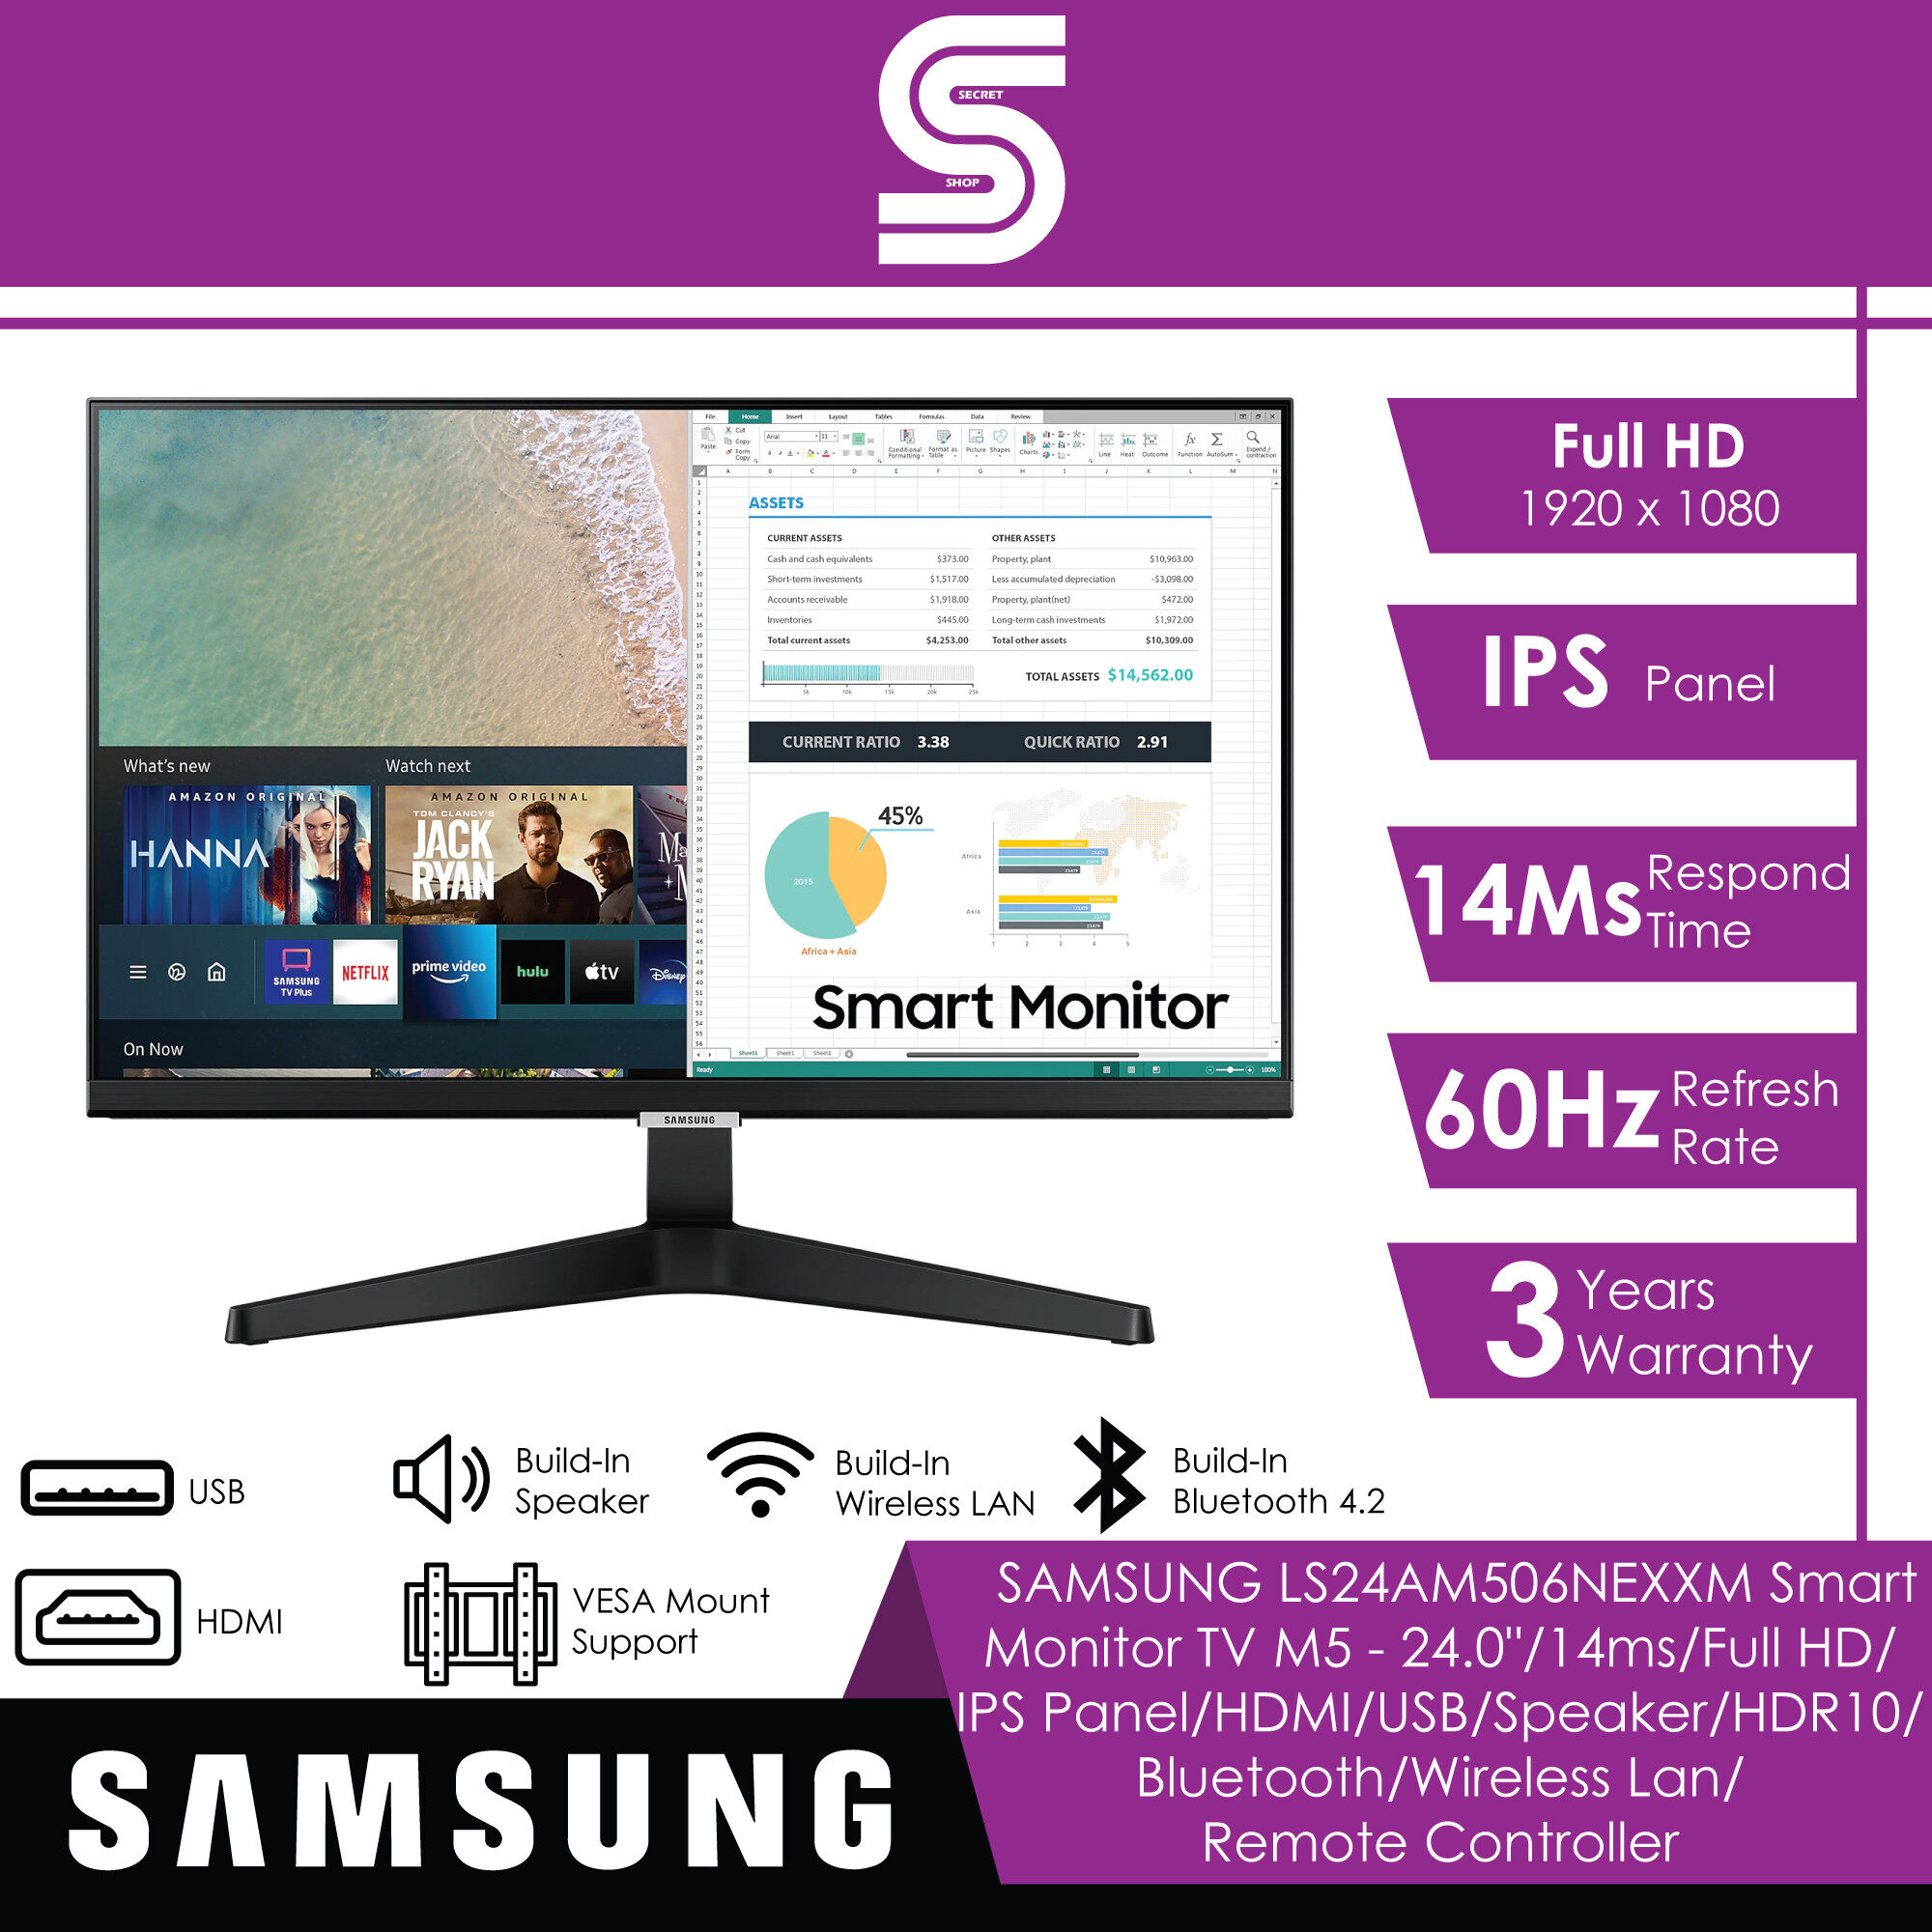 SAMSUNG LS24AM506NEXXM Smart Monitor TV M5 - 24.0"/14ms/Full HD/ IPS Panel/HDMI/USB/Speaker/HDR10/ Bluetooth/Wireless Lan/ Remote Controller